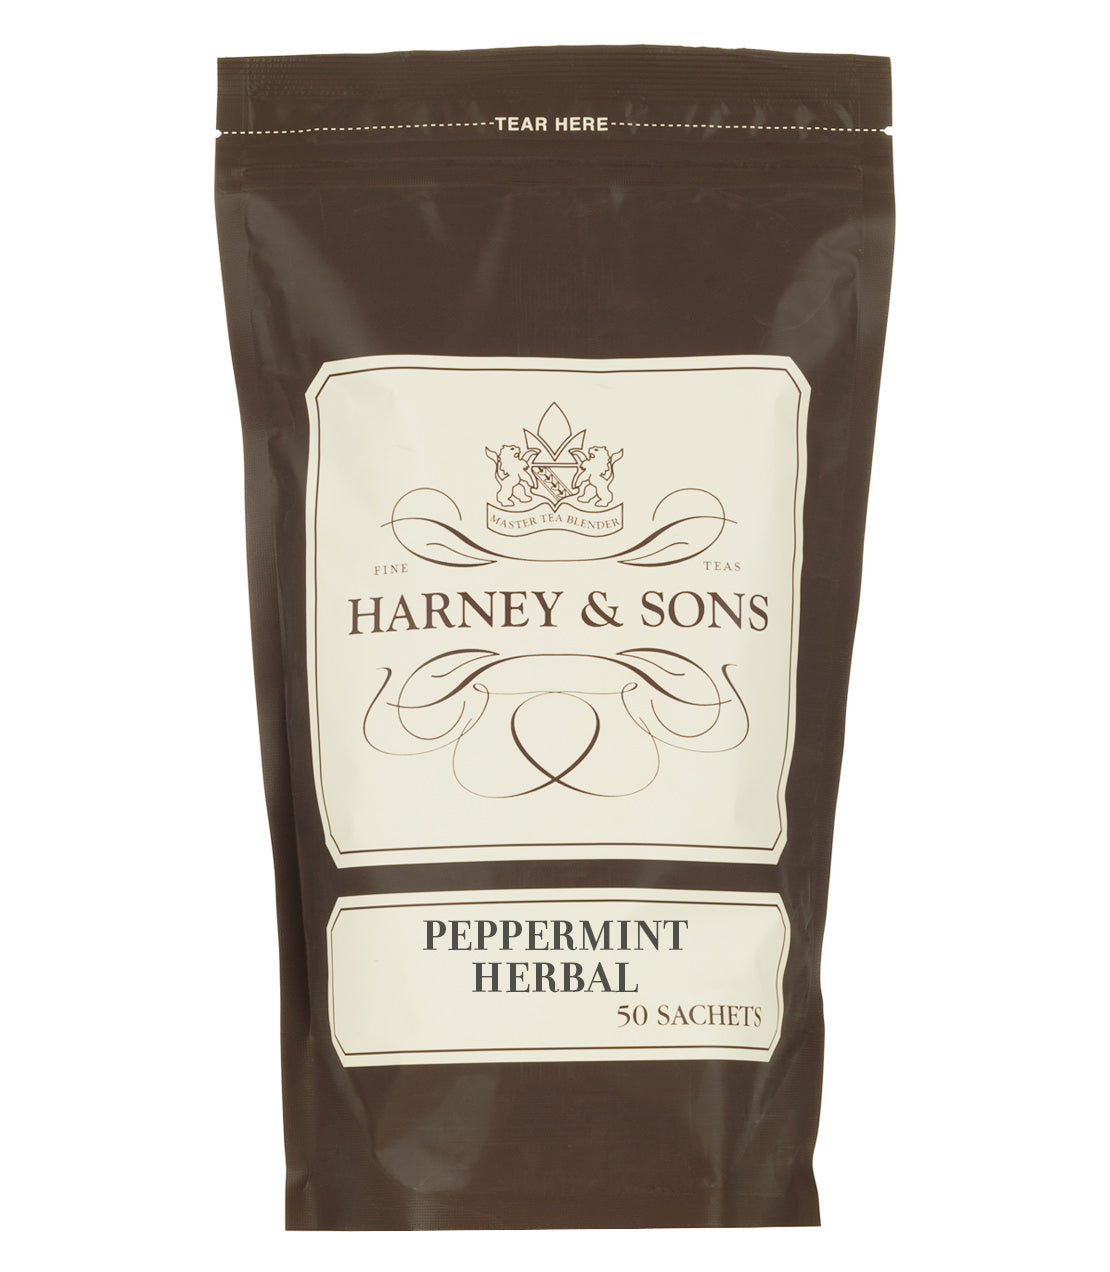 Peppermint Herbal, Bag of 50 Sachets - Sachets Bag of 50 Sachets - Harney & Sons Fine Teas